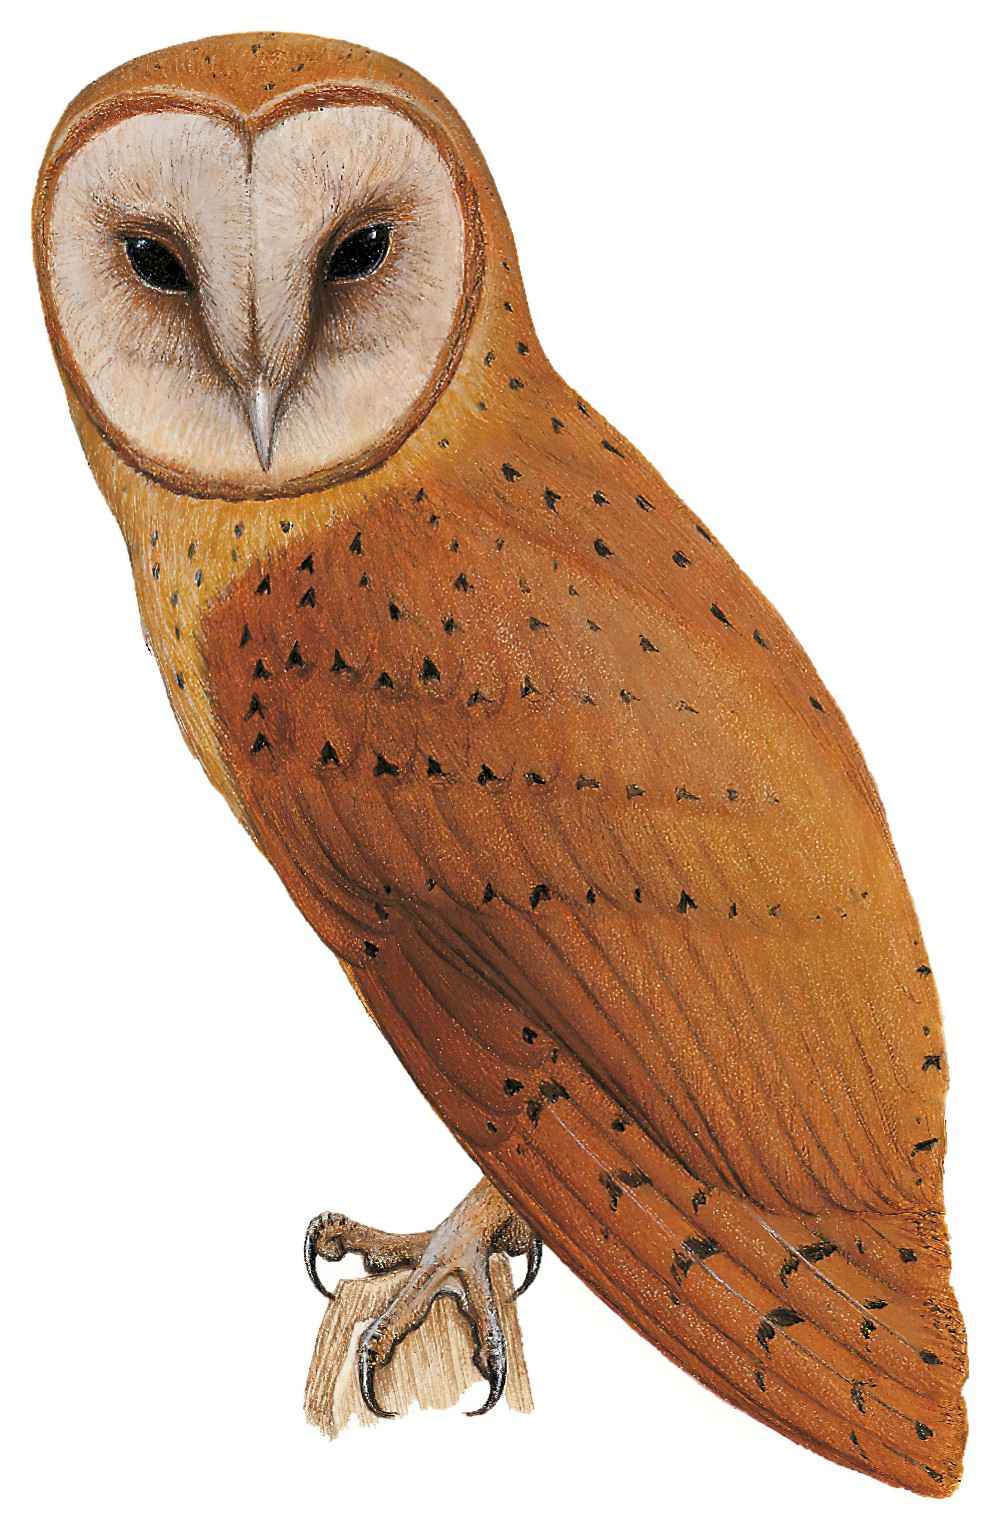 Red Owl / Tyto soumagnei